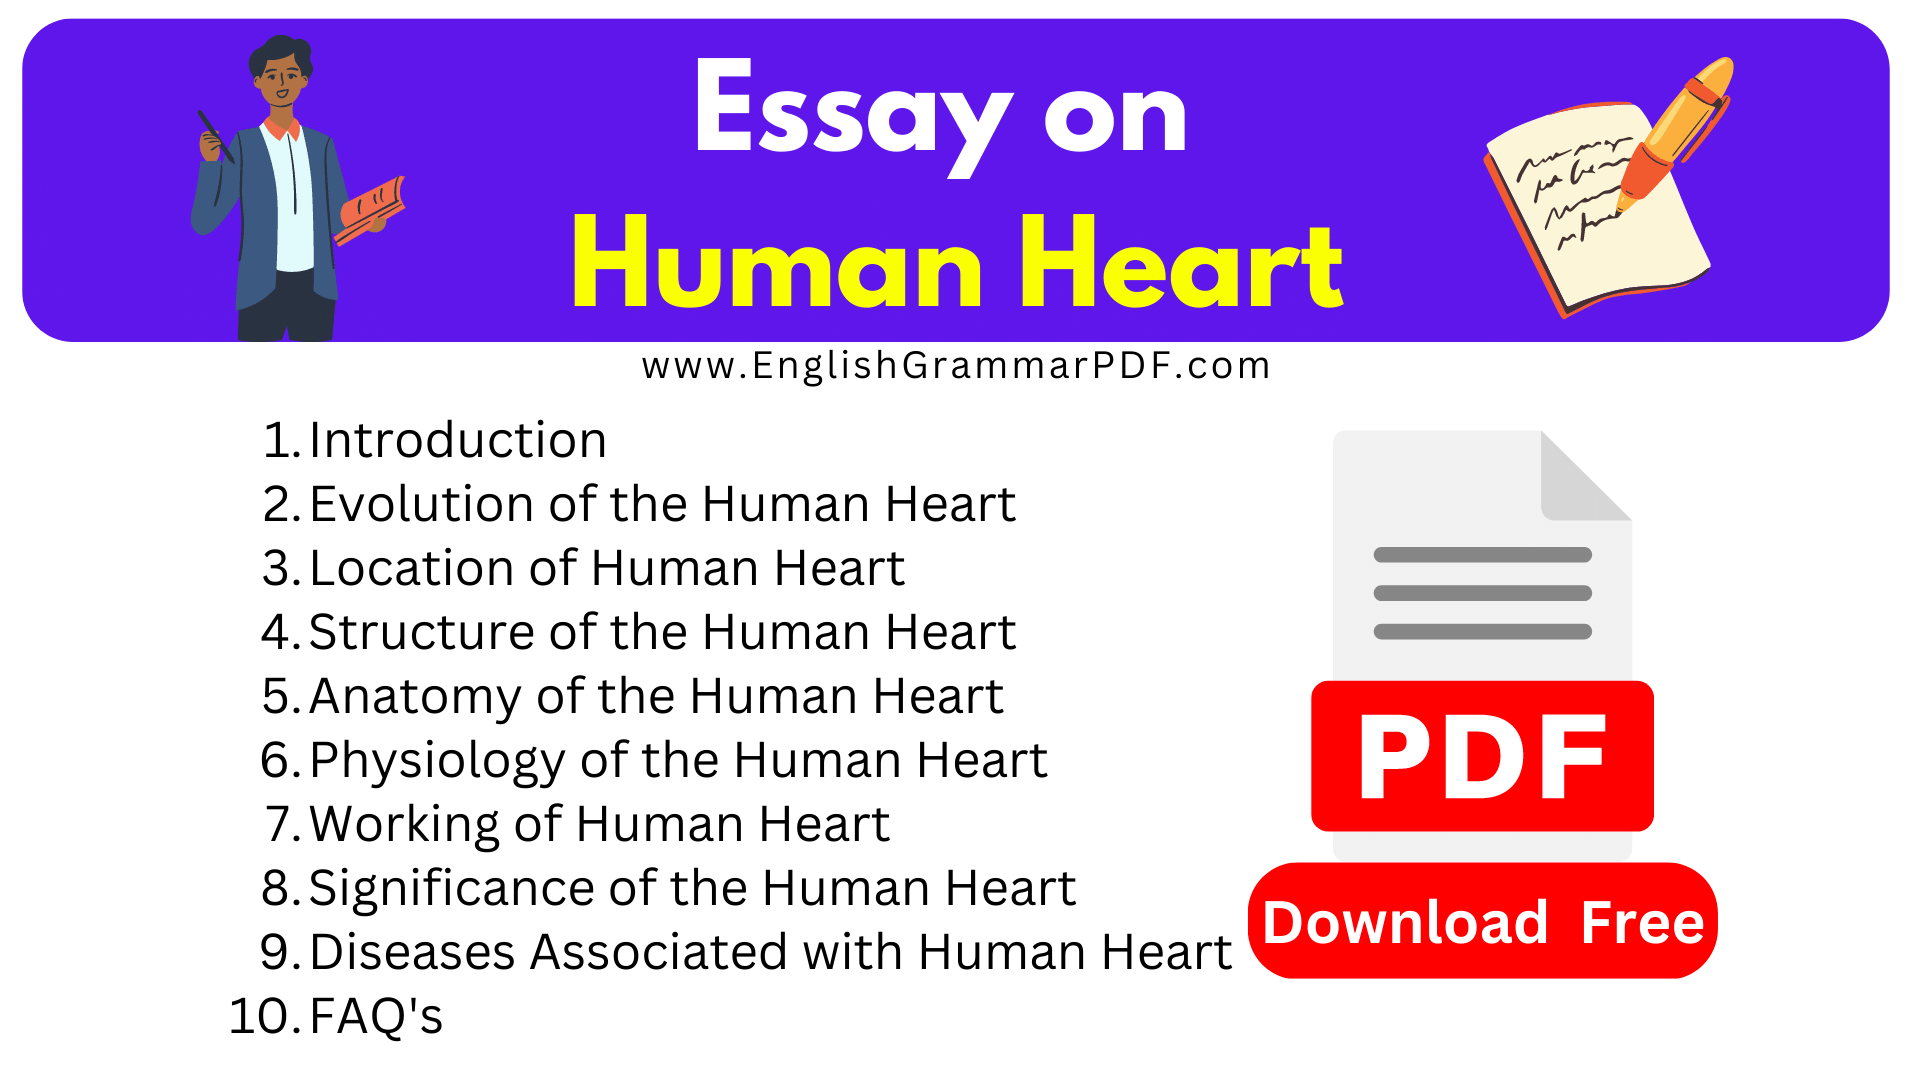 Essay on Human Heart